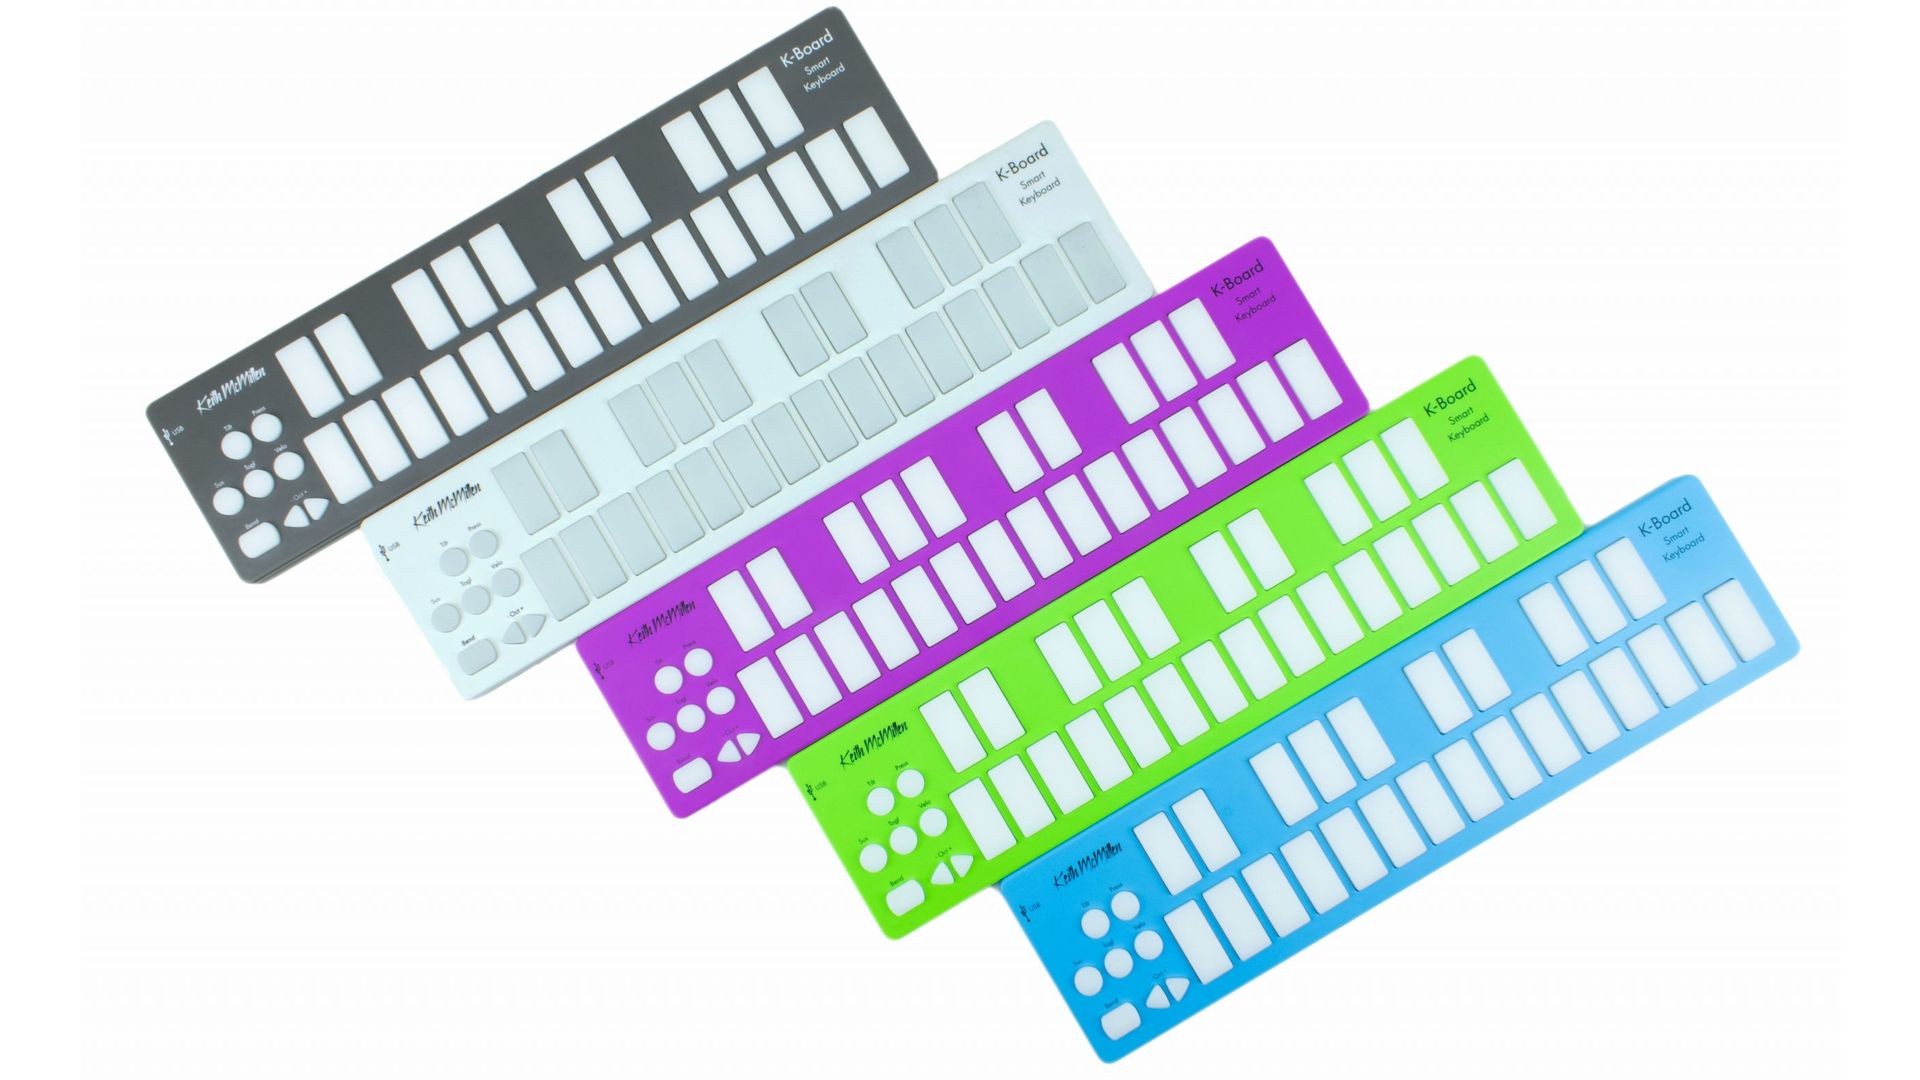 K board. ZX USB Keyboard Controller. 2axgdrls5c Board. Vortex Keyboard k87s PNG. Midi-клавиатура Keith MCMILLEN K-Board.